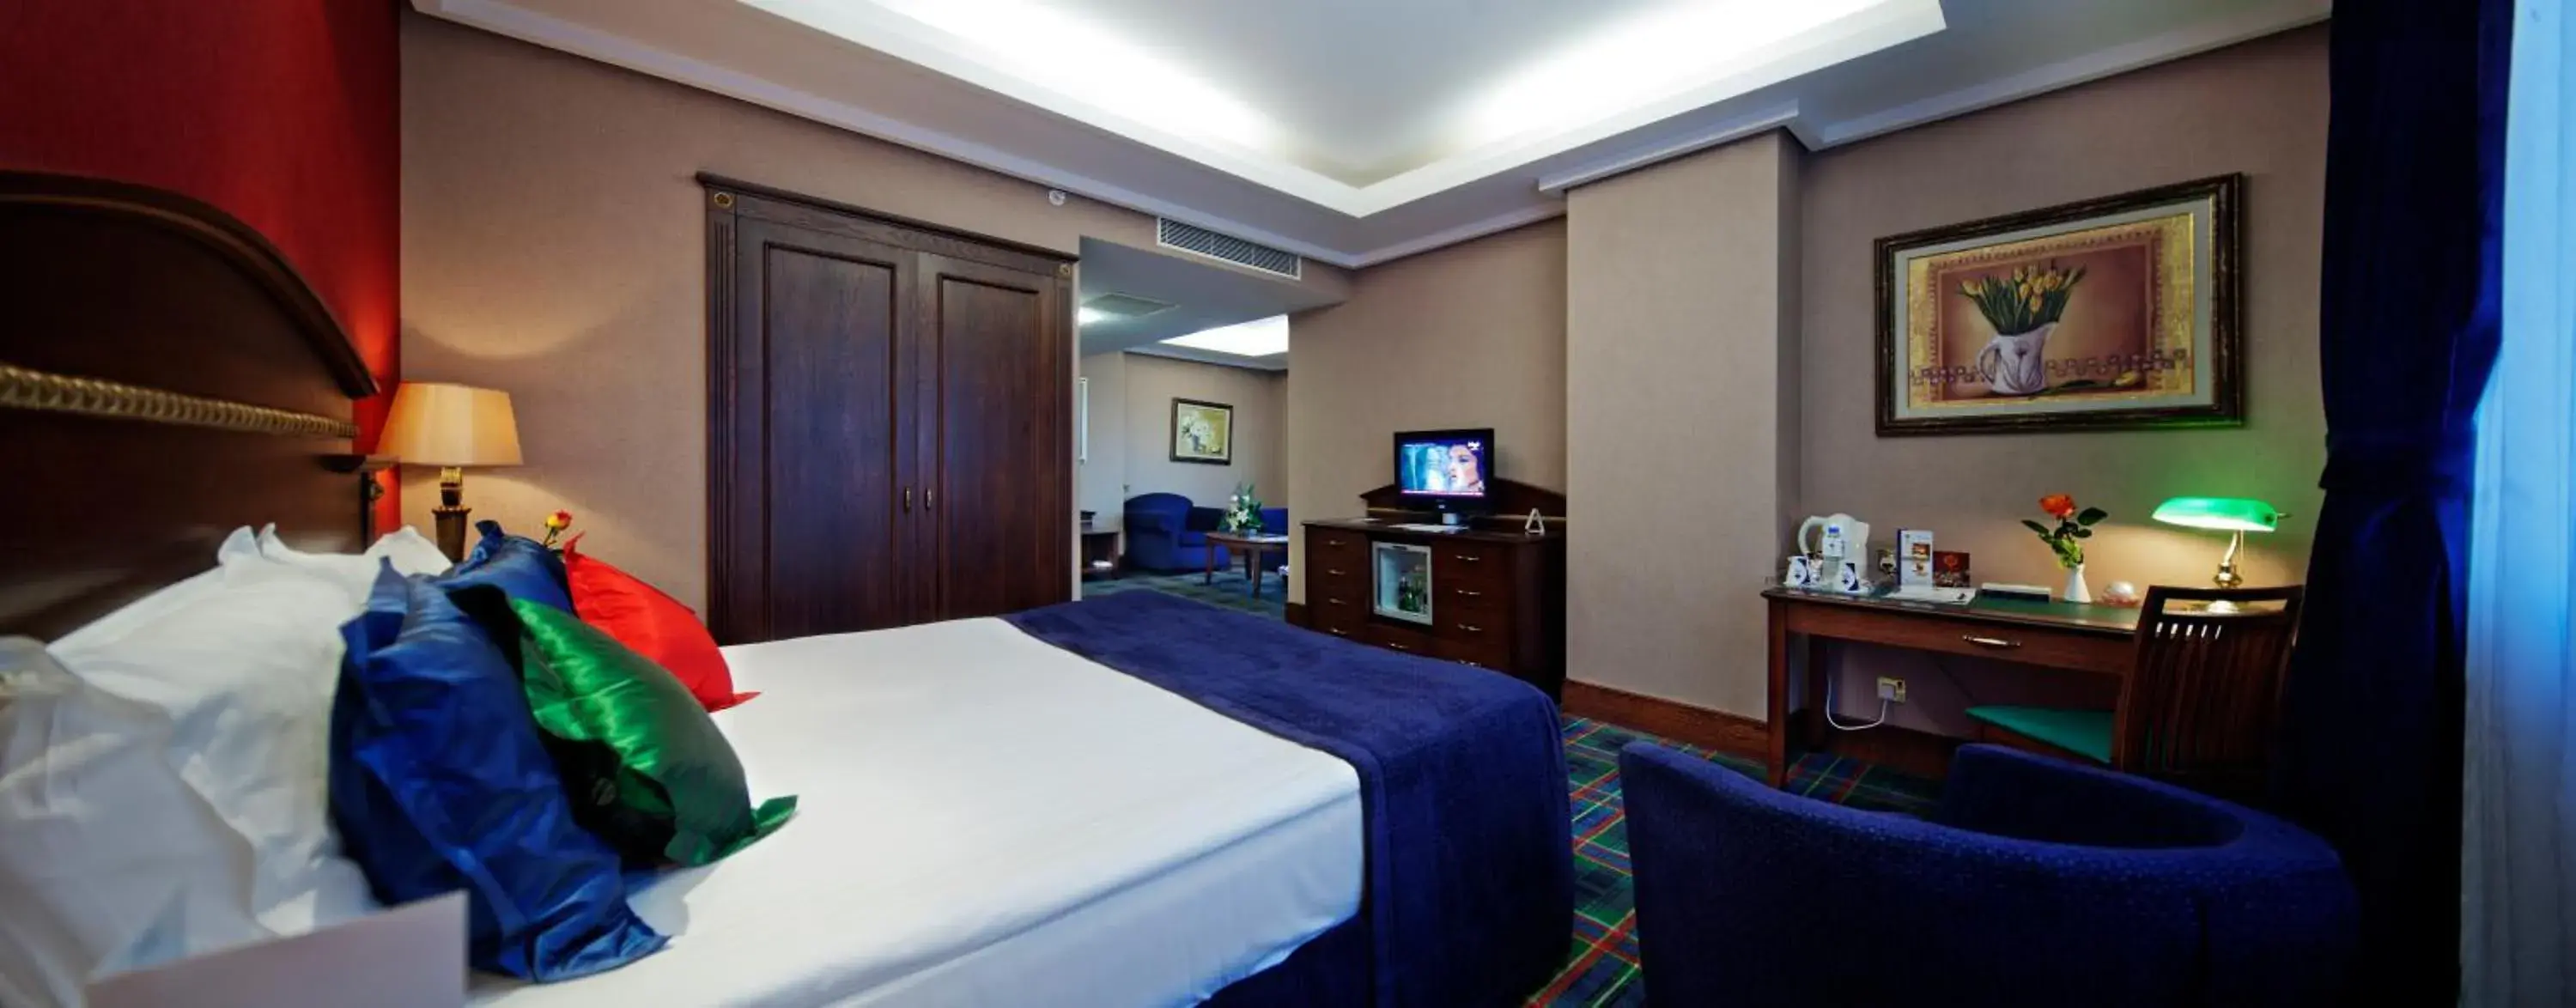 Bed, Room Photo in Merit Lefkosa Hotel & Casino